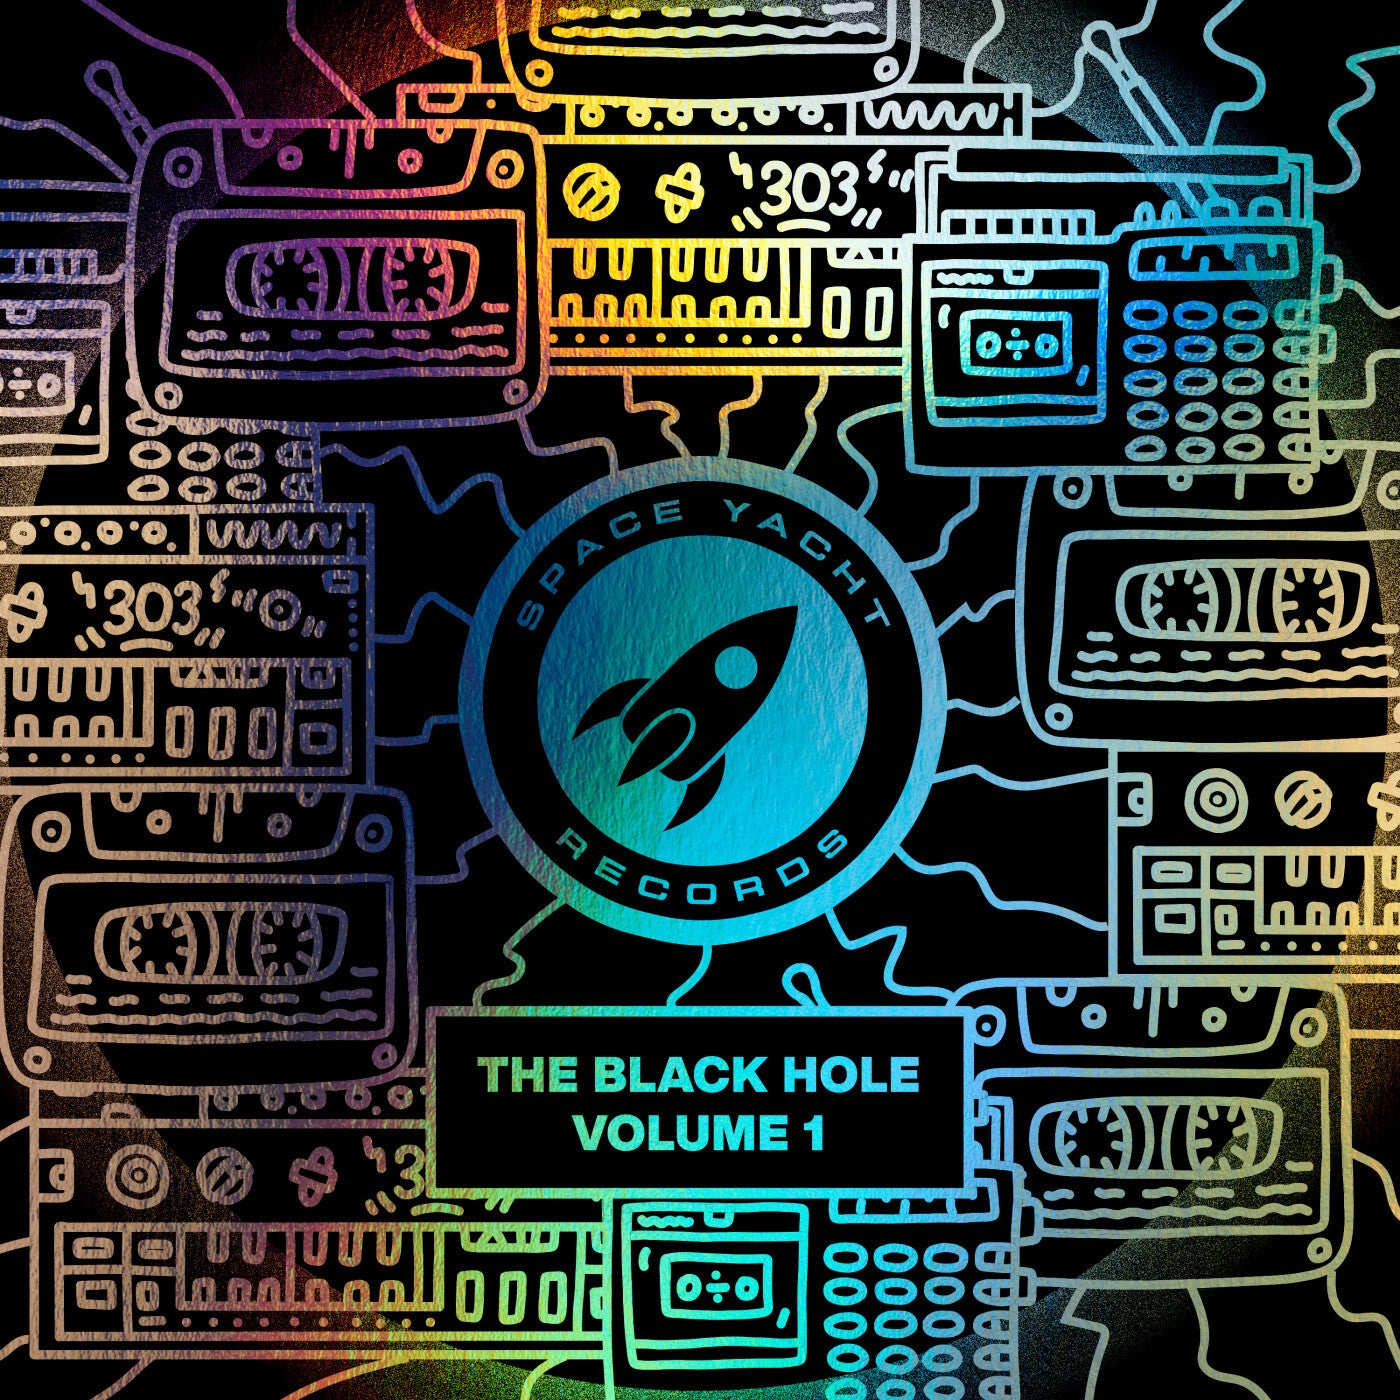 The Black Hole Vol. 1